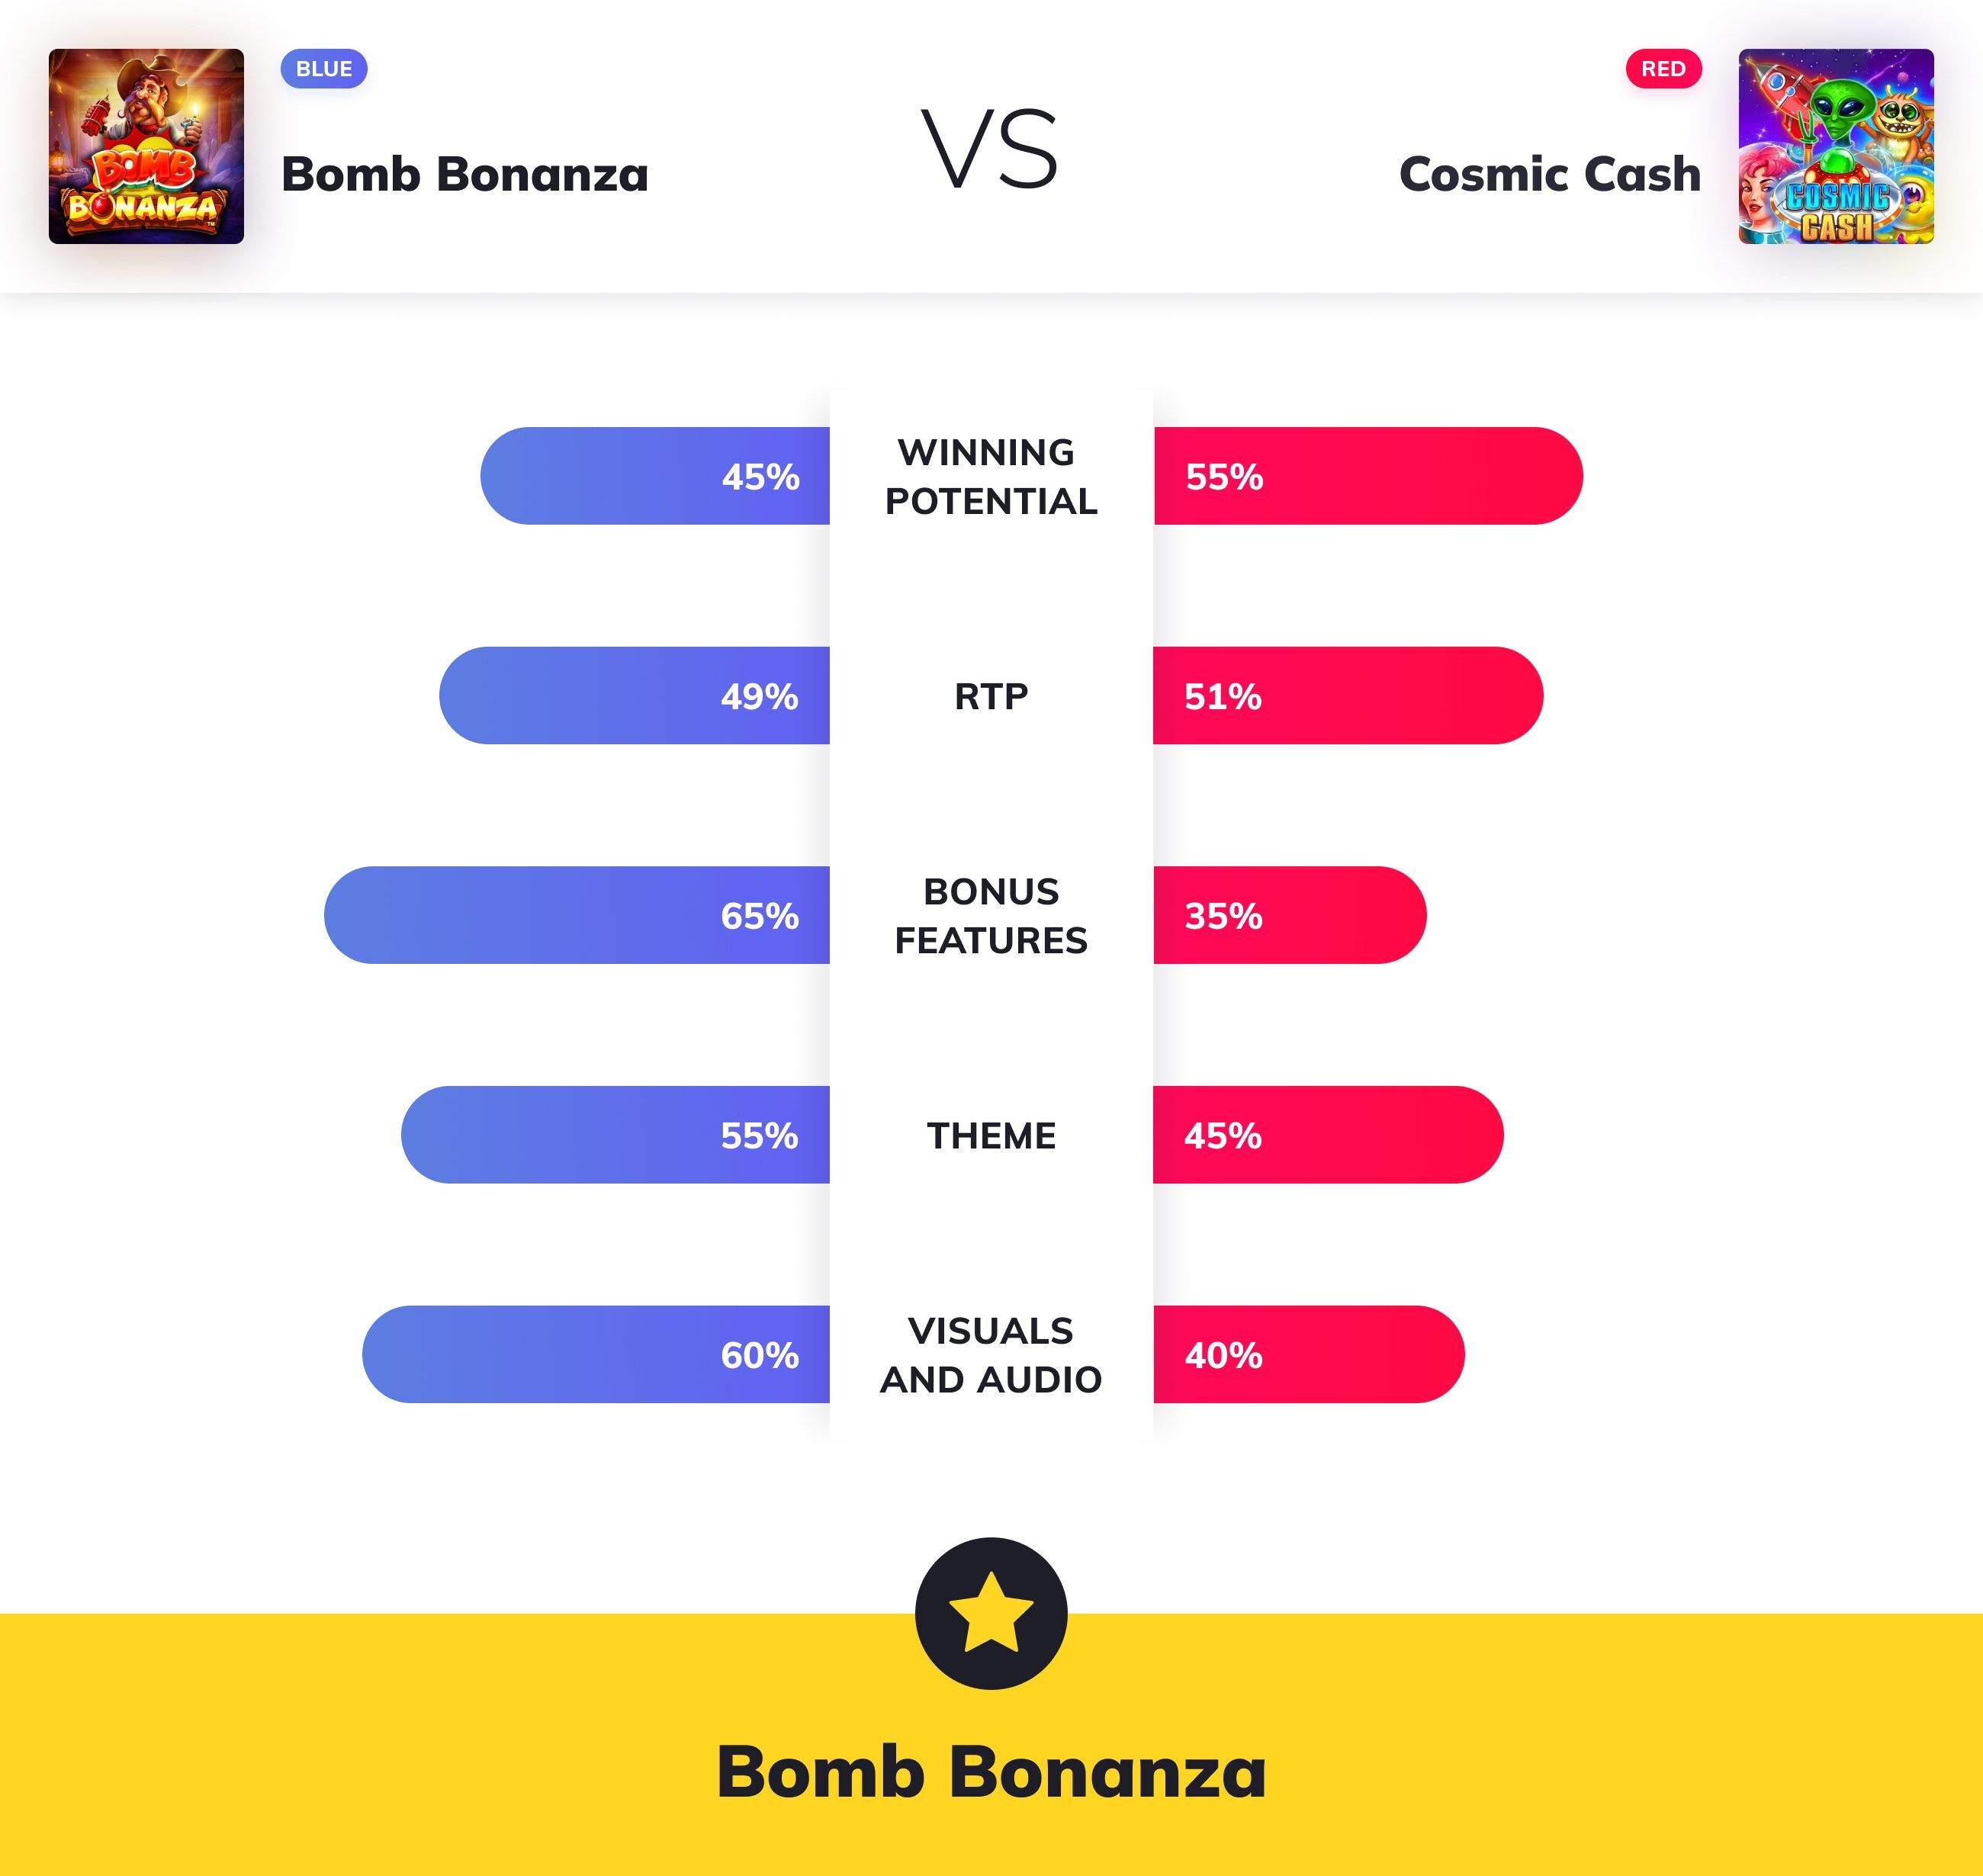 Slot Wars - Bomb Bonanza VS Cosmic Cash